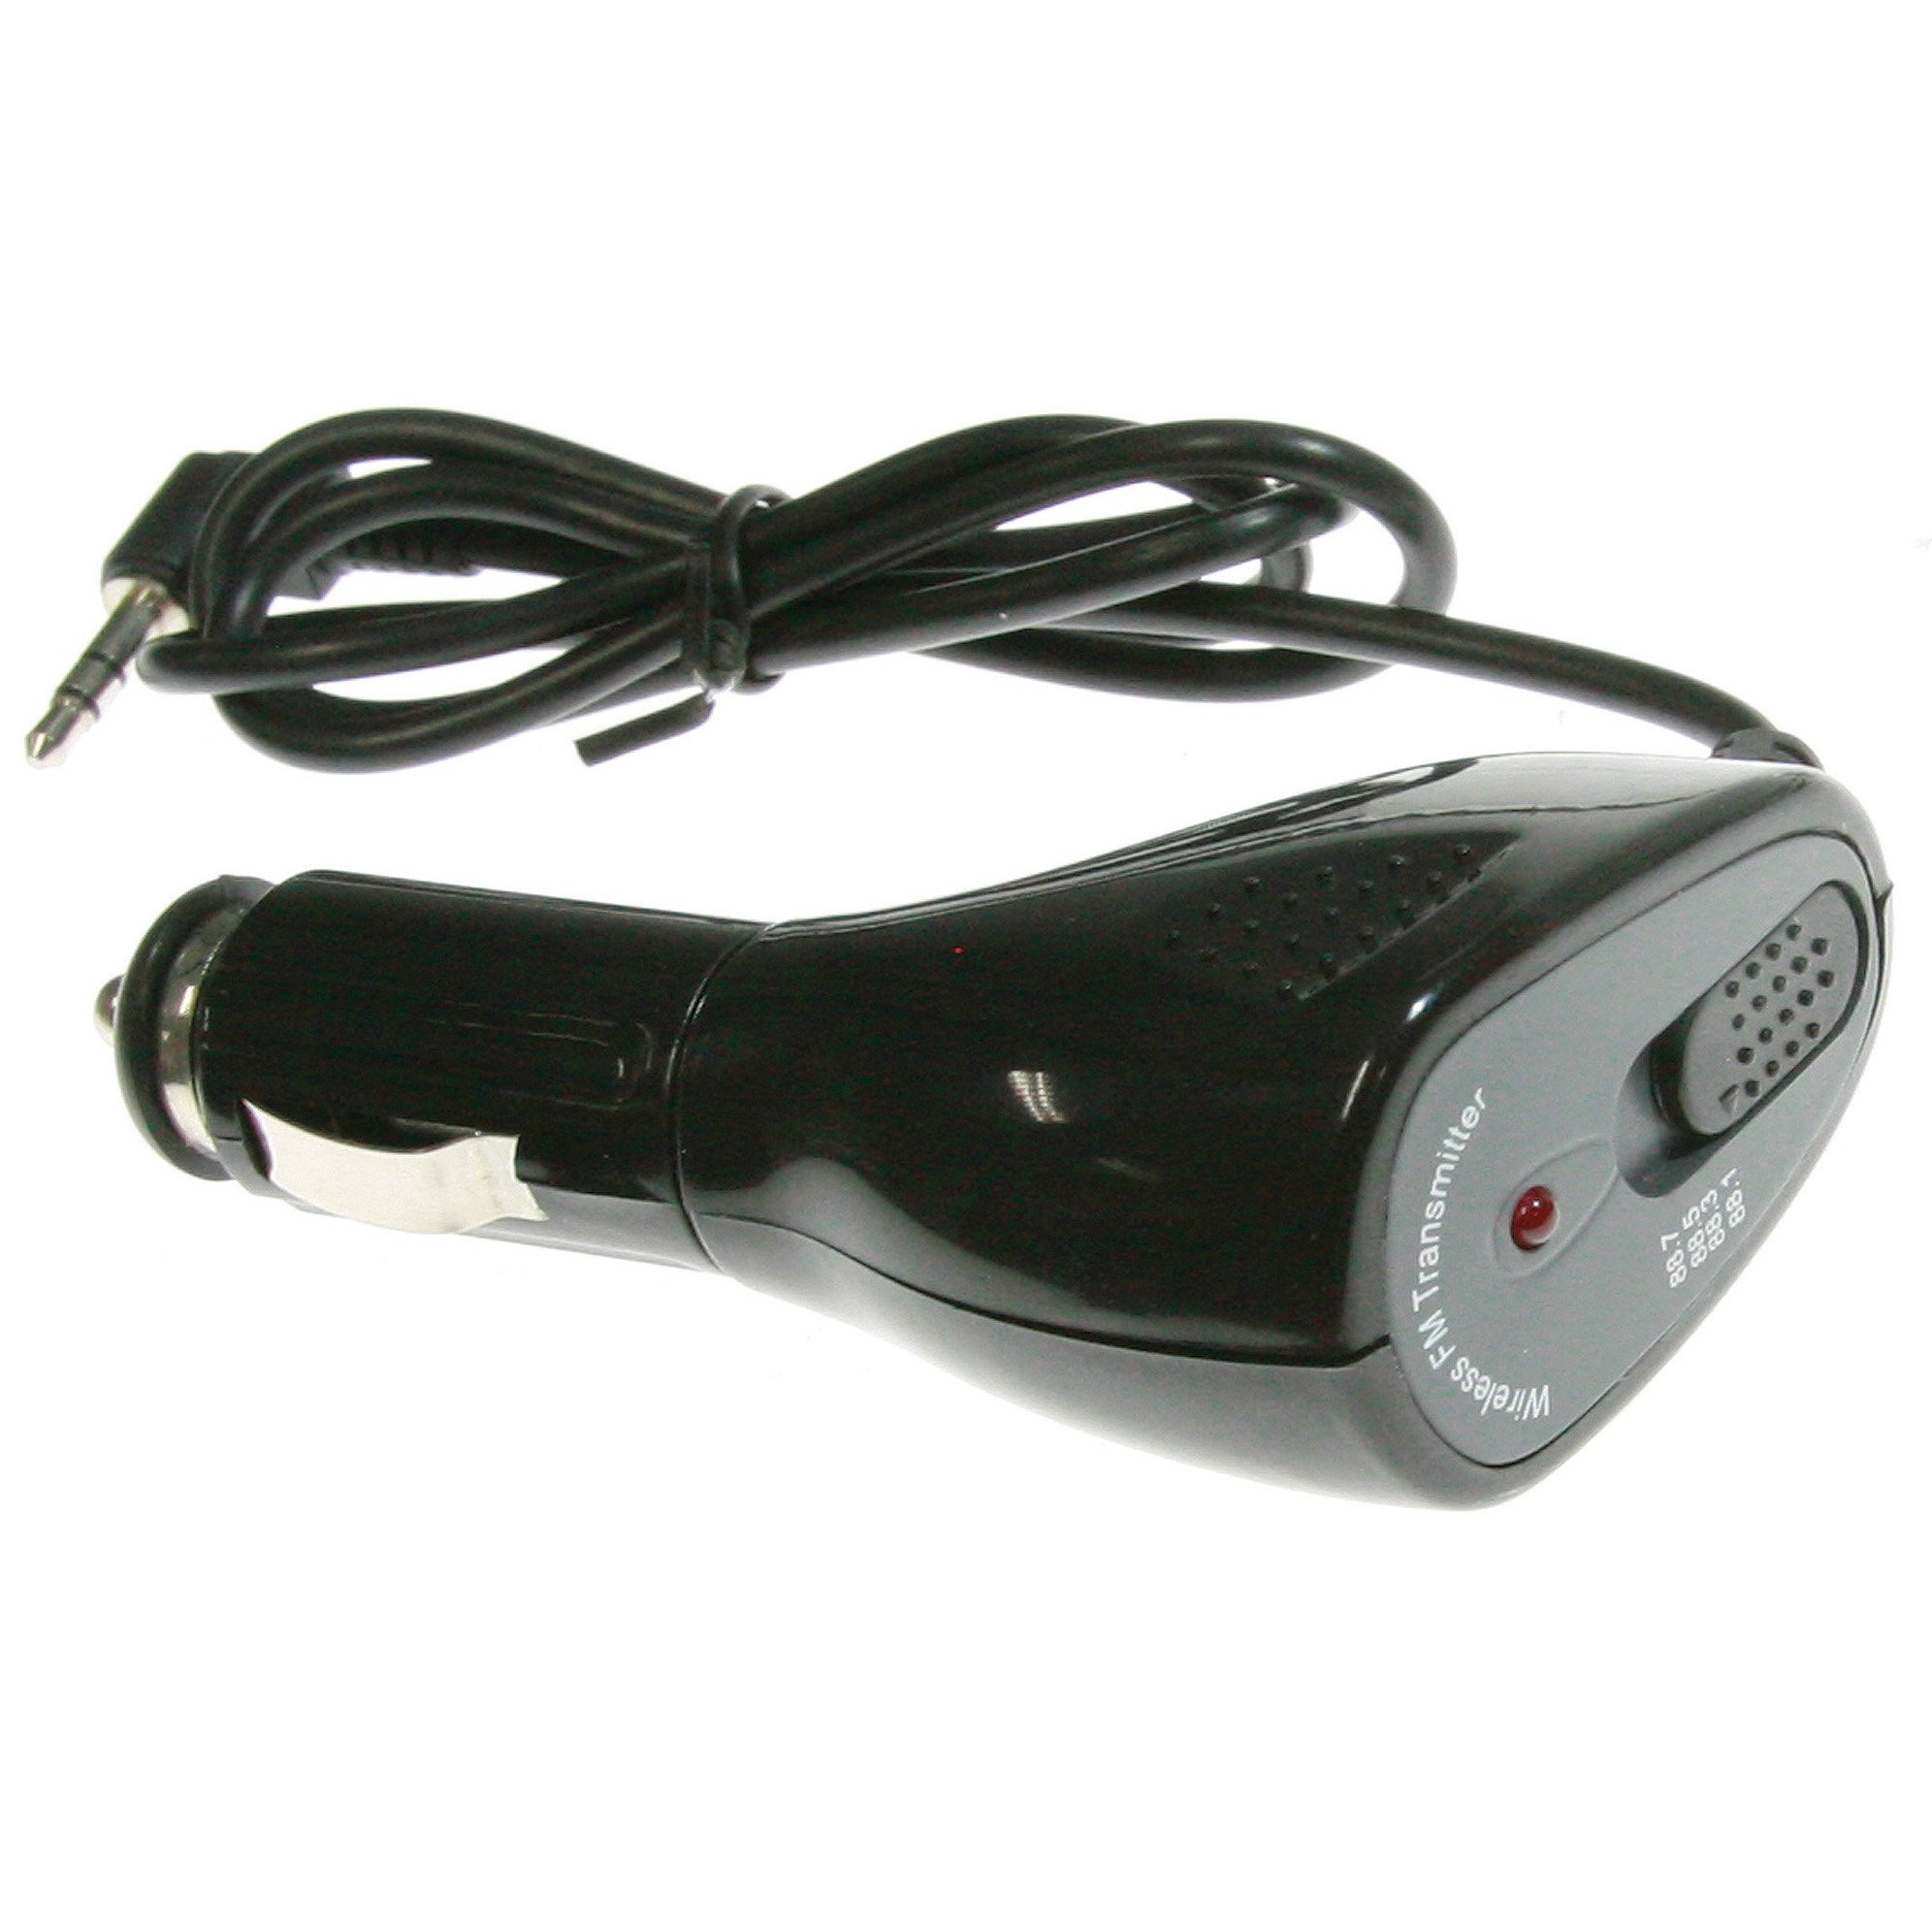 Aerpro Bluetooth FM Transmitter with QC3.0 USB APBT210